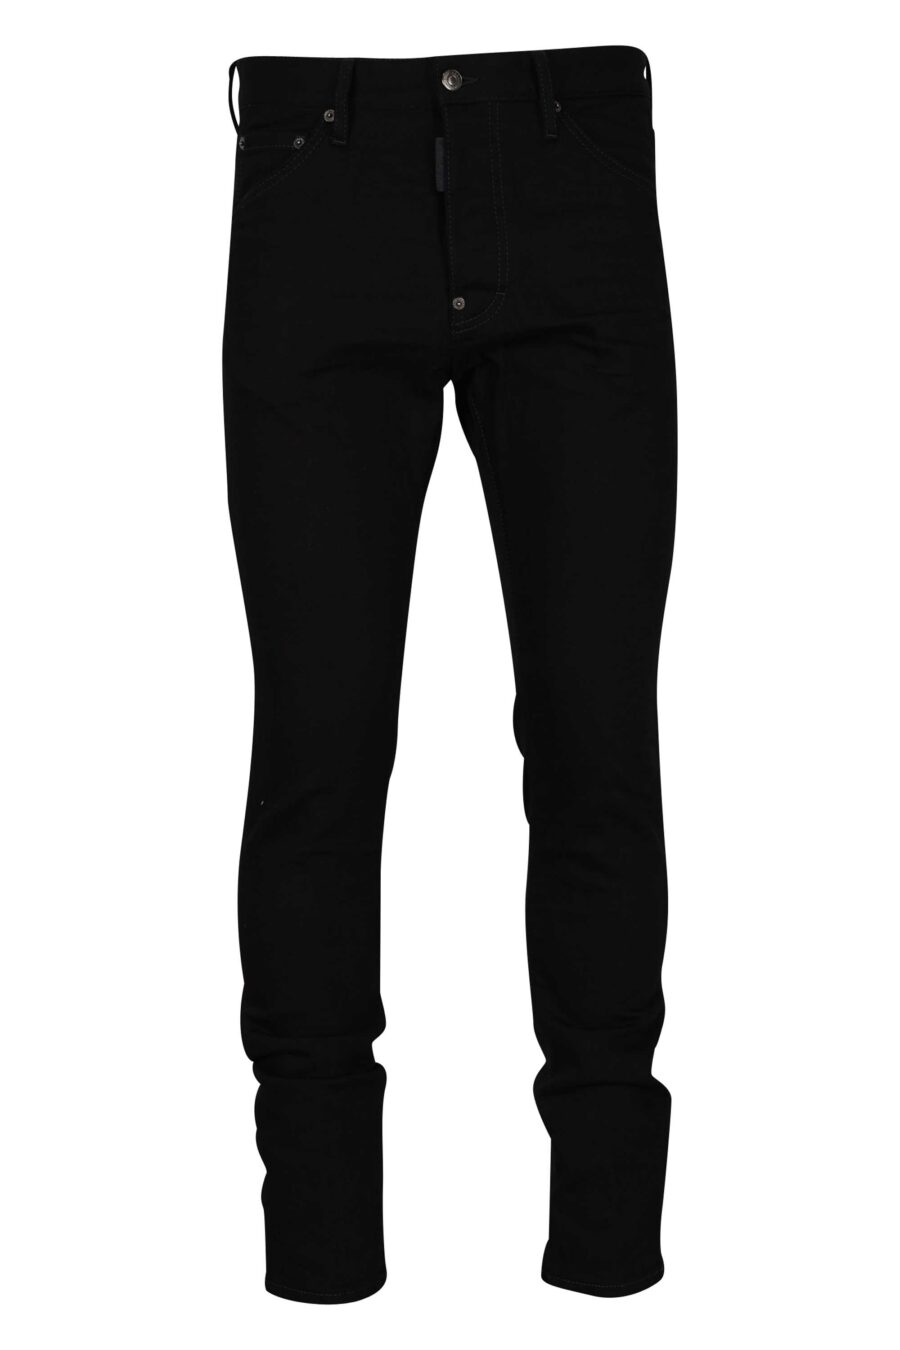 C.P. Company - Pantalón de chándal negro con bolsillos laterales y logo  lente - BLS Fashion